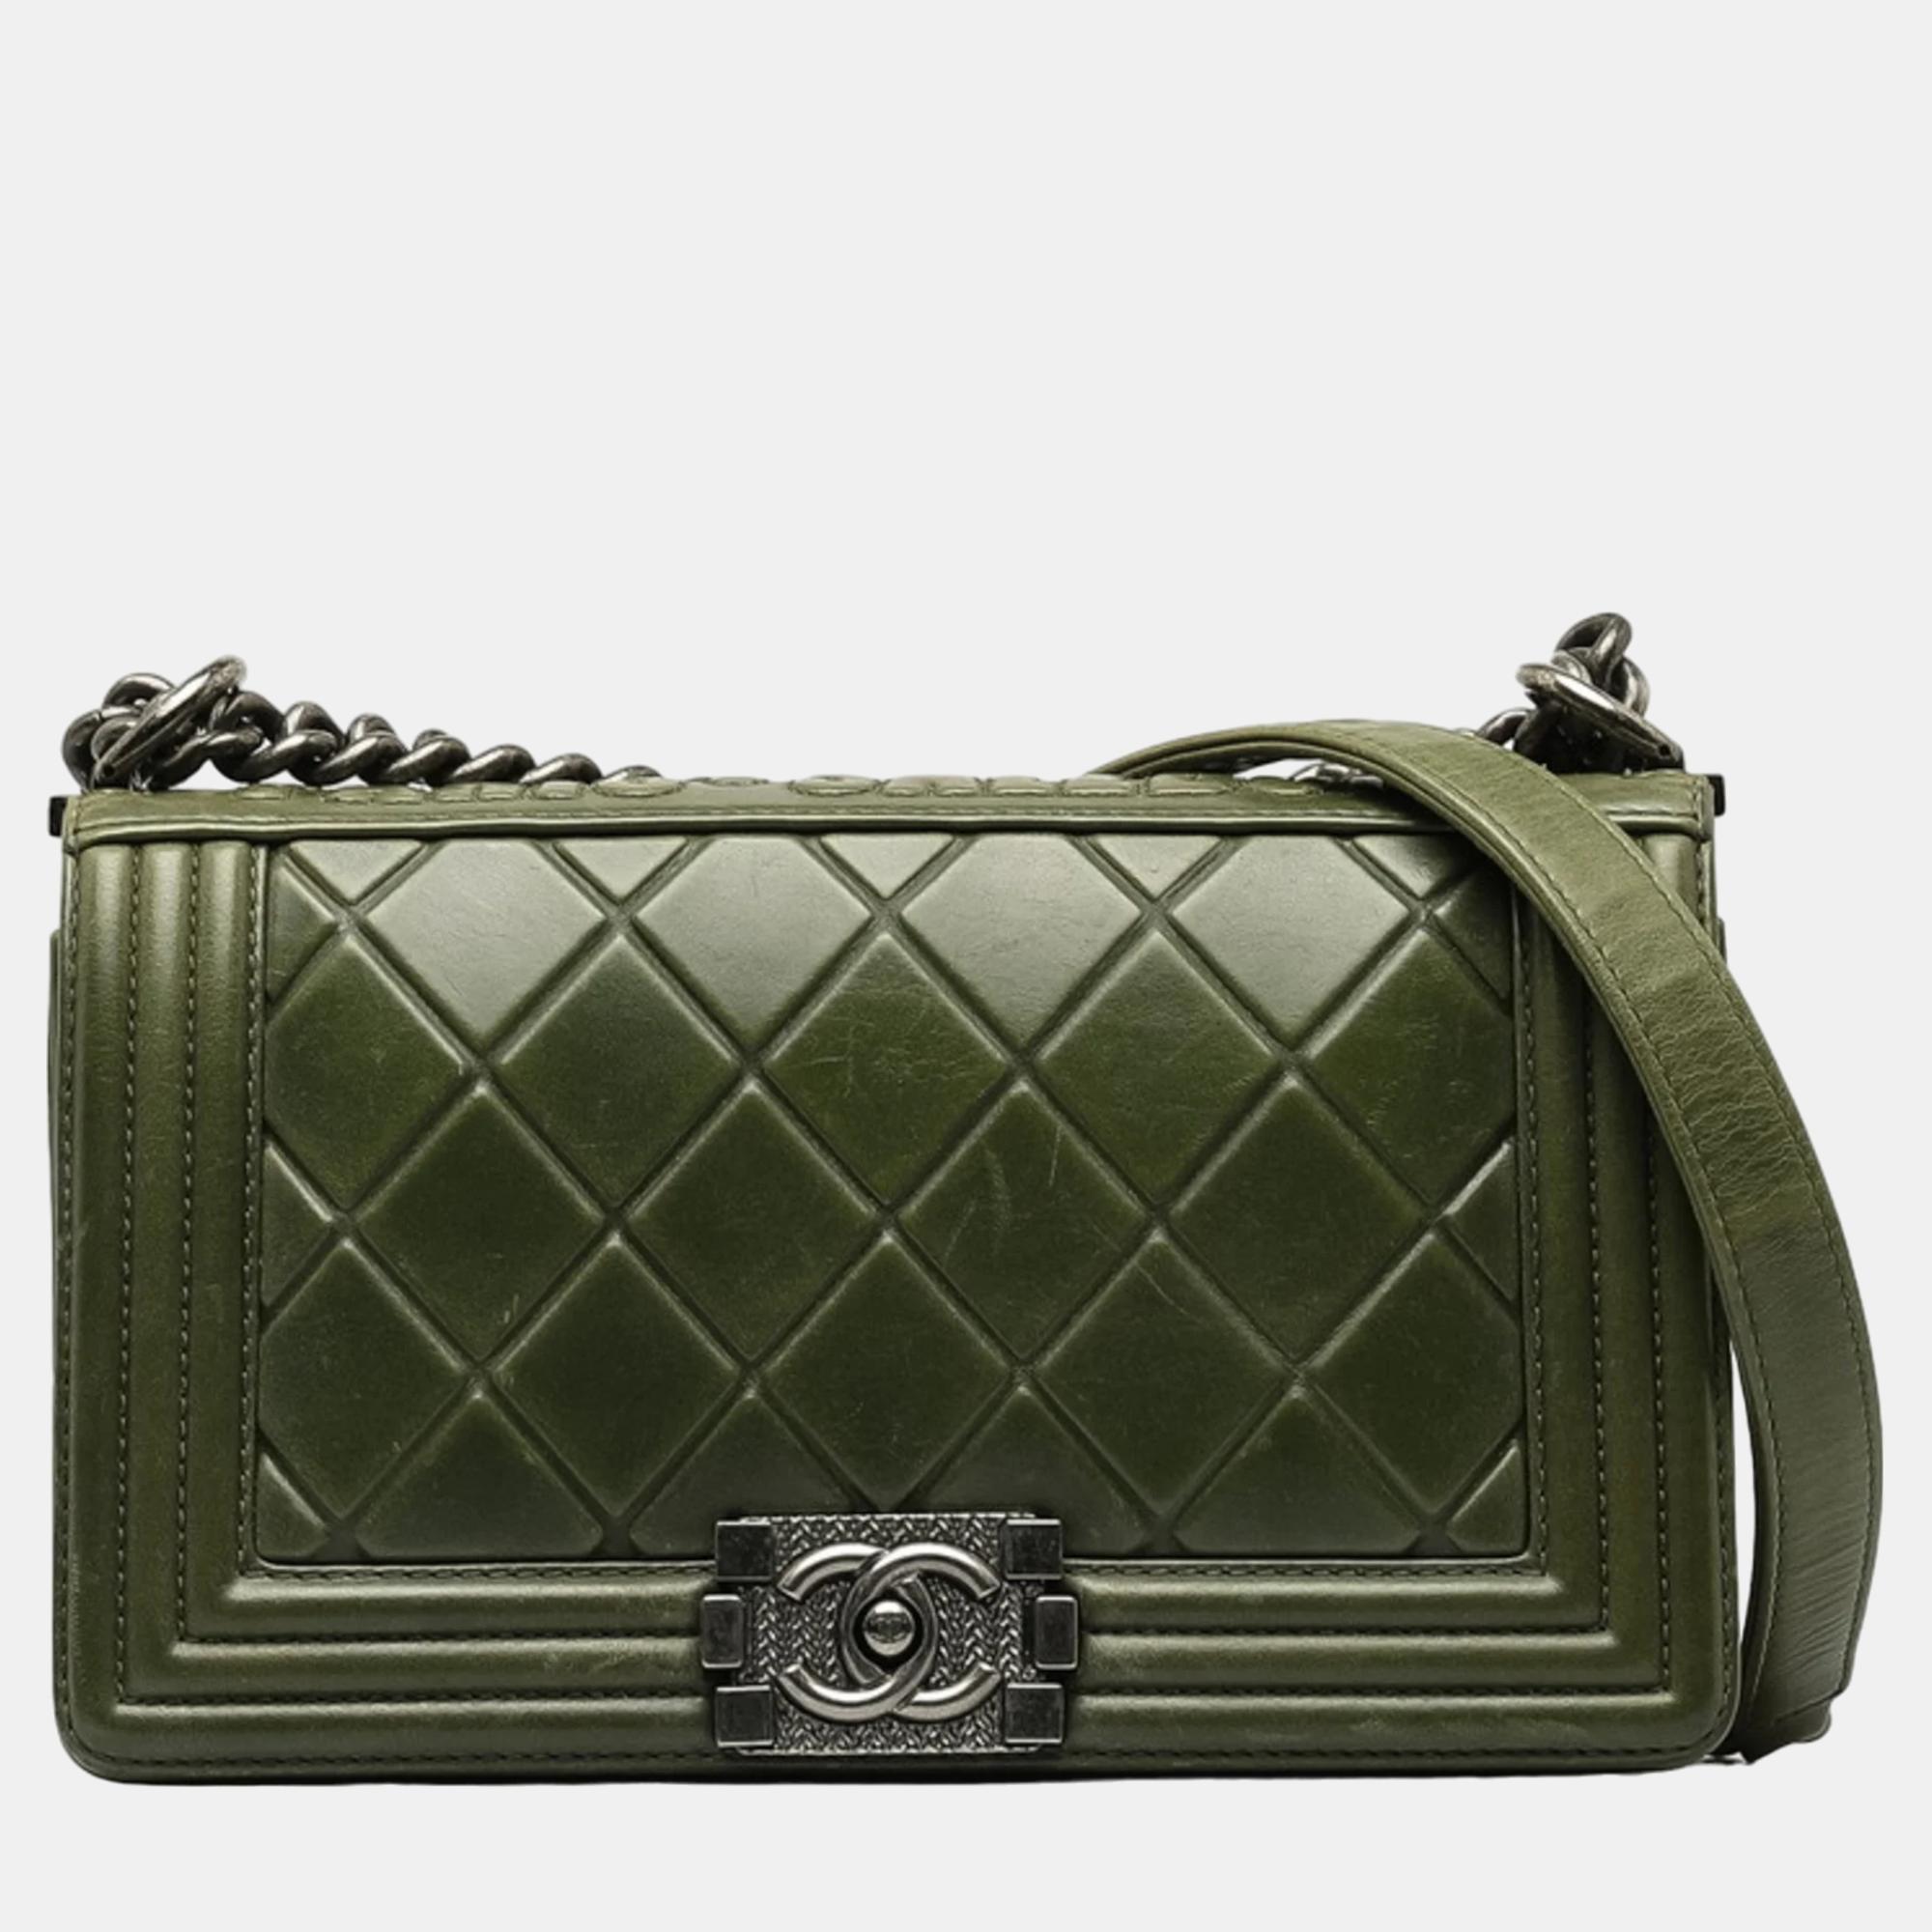 Chanel green leather medium paris-salzburg embossed boy bag